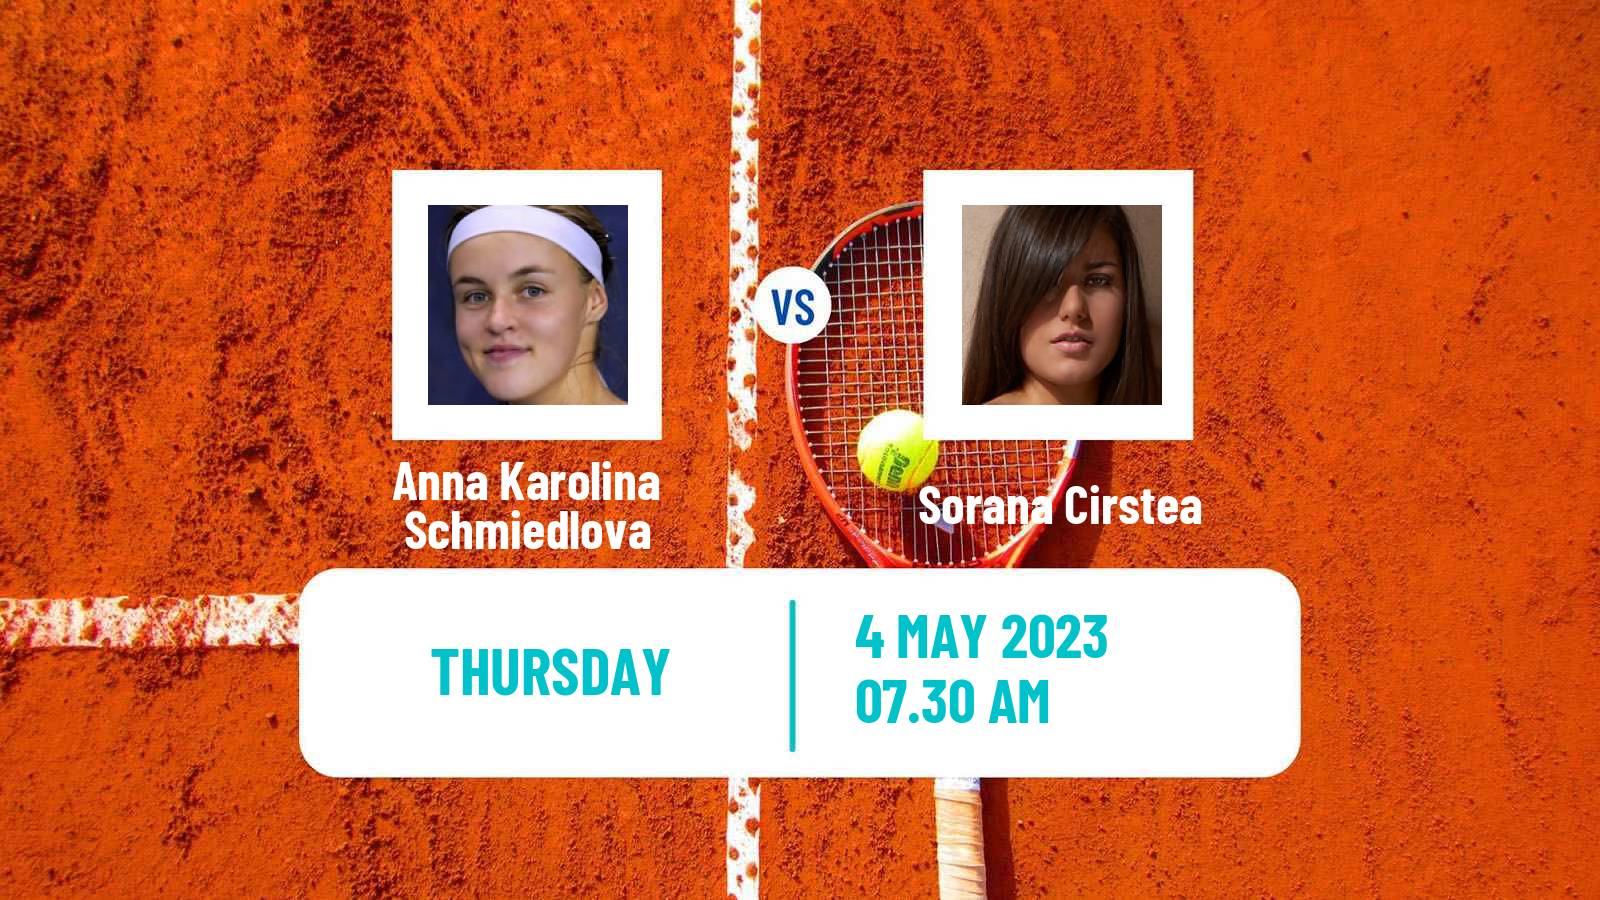 Tennis ATP Challenger Anna Karolina Schmiedlova - Sorana Cirstea